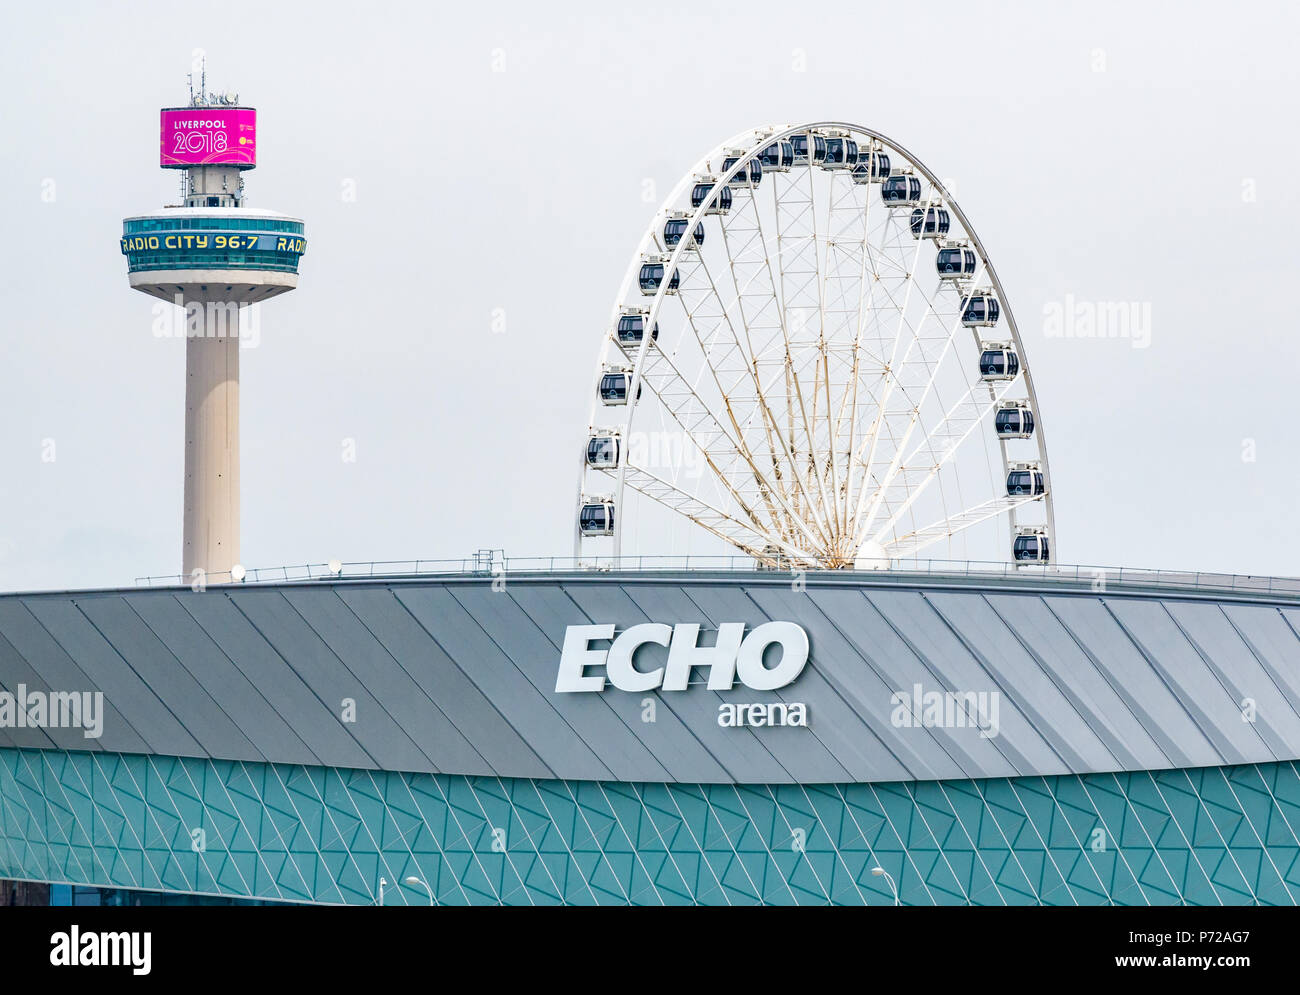 Echo Arena Liverpool, with ferris wheel the Liverpool Wheel and St John's Beacon tower, Radio City Tower, Liverpool, England, UK Stock Photo